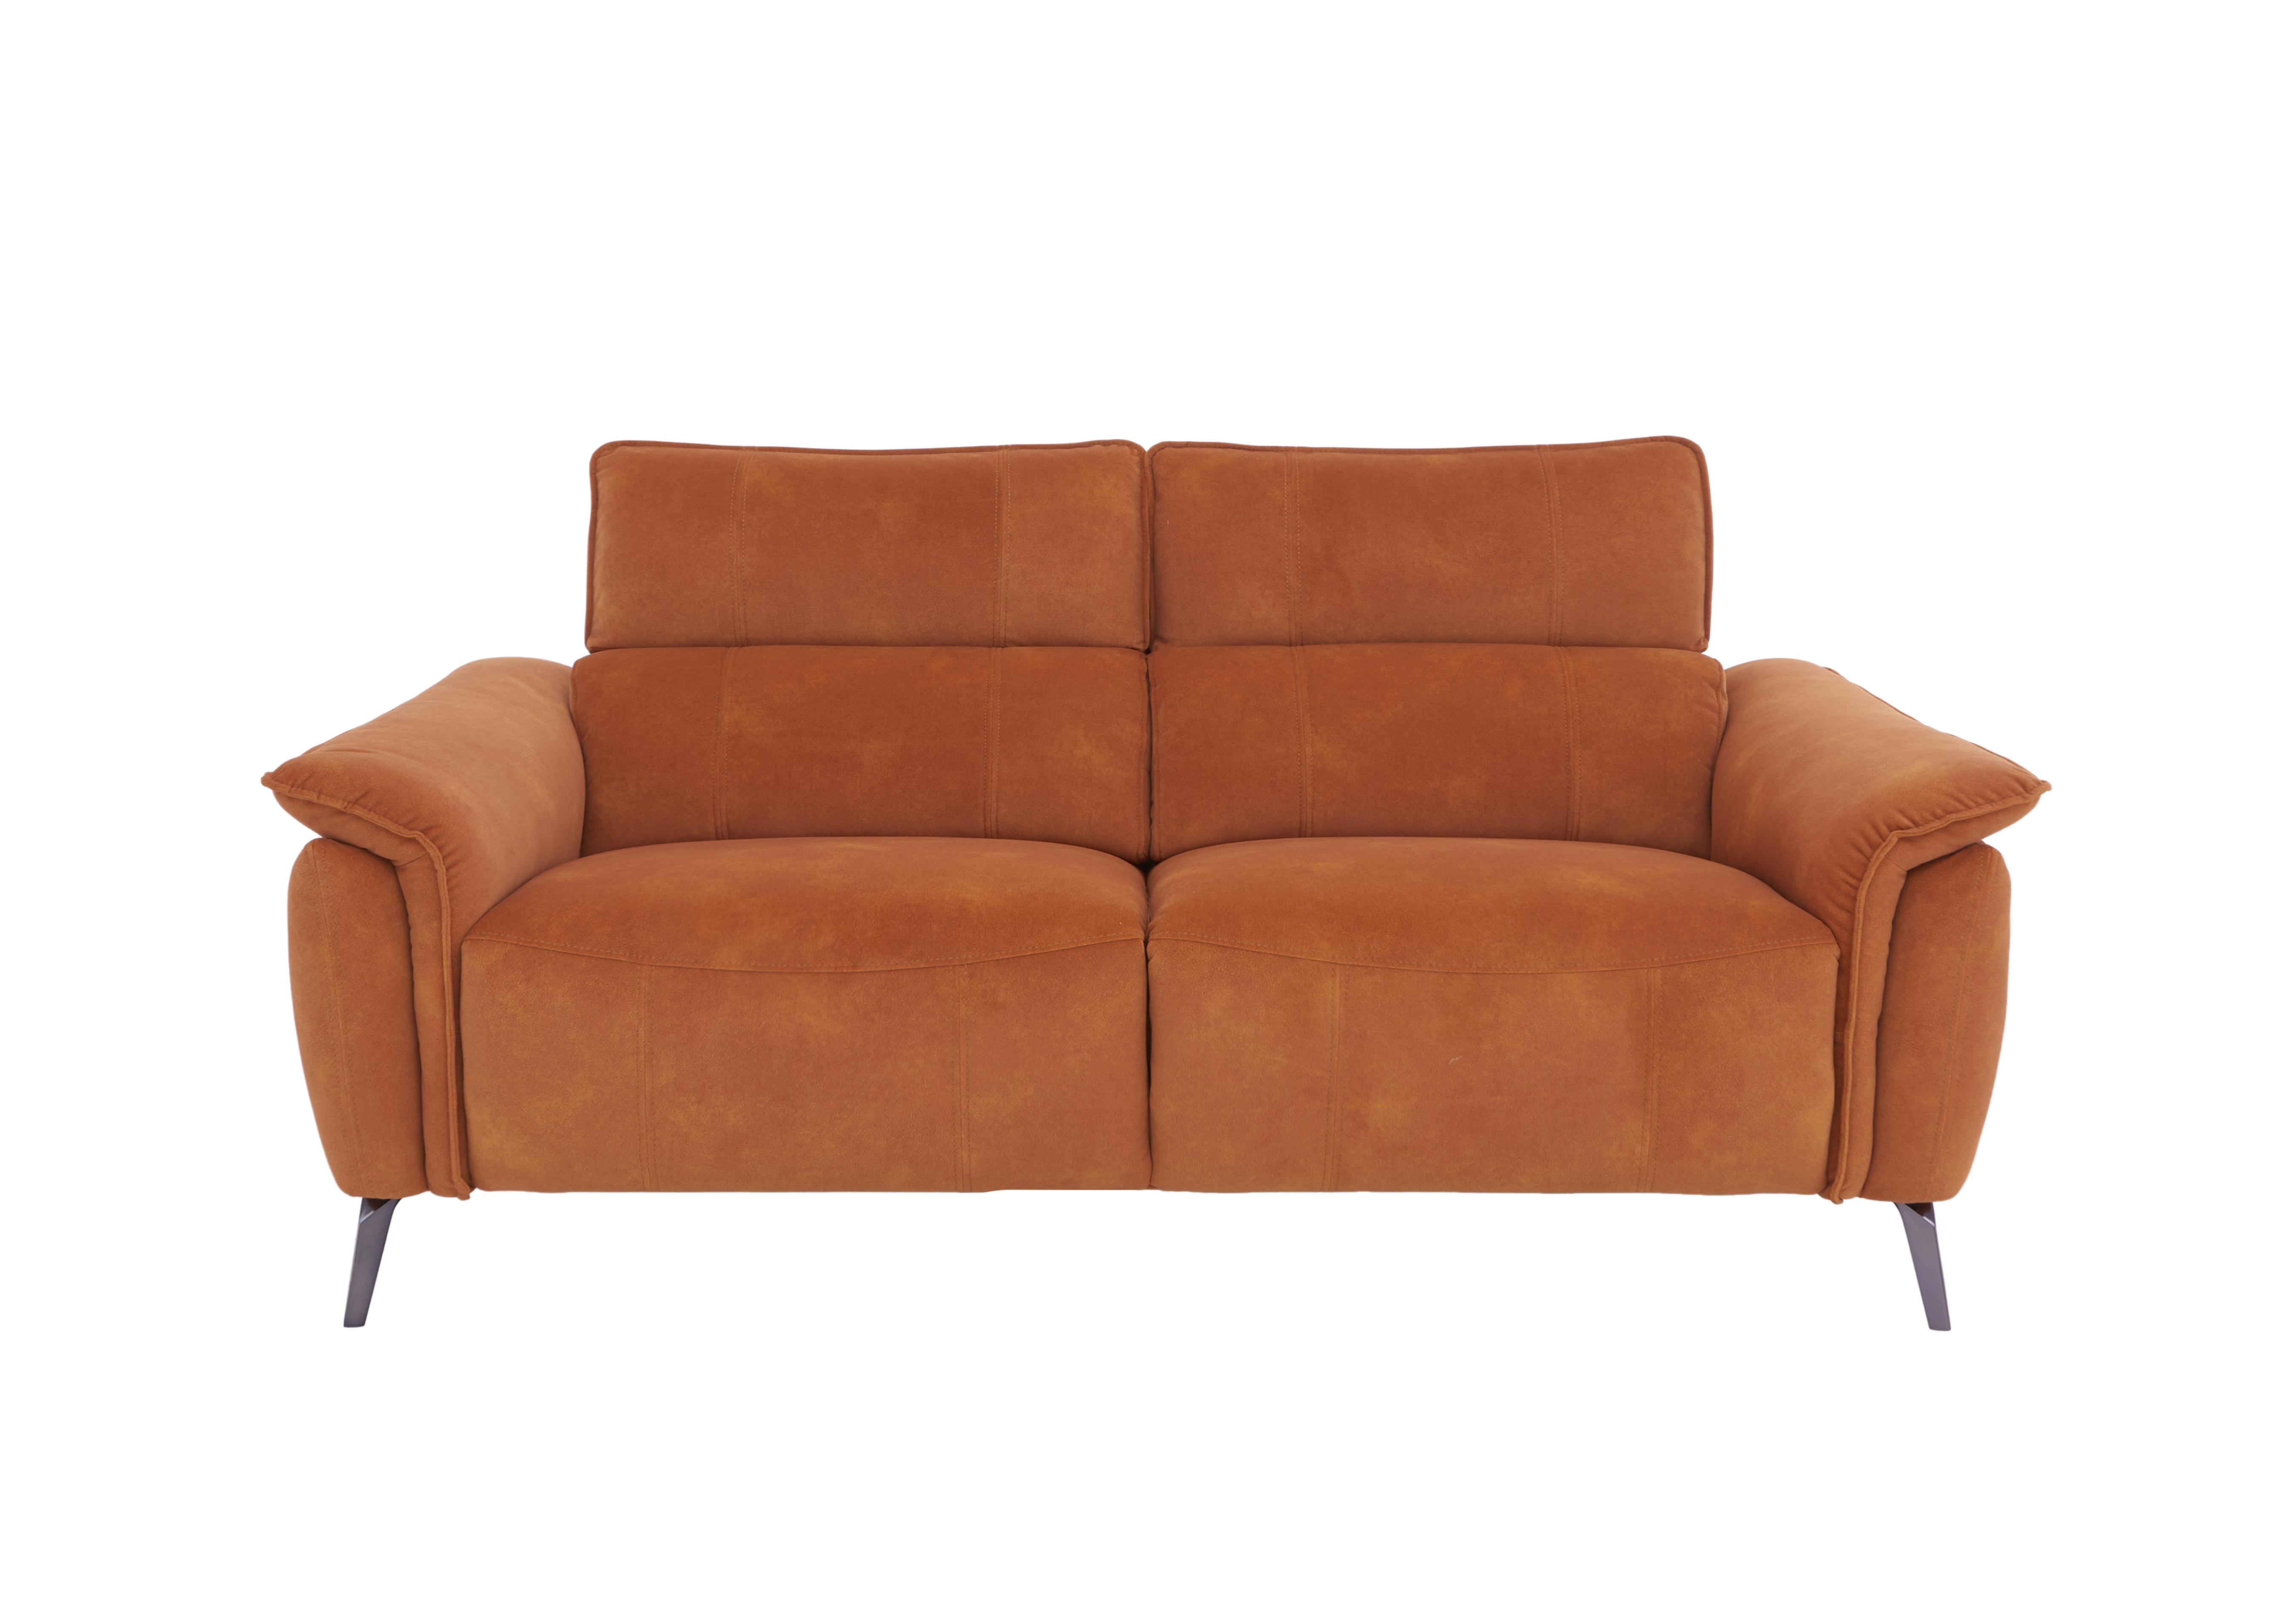 Jude 3 Seater Fabric Sofa in Pumpkin Dexter 09 43509 on Furniture Village